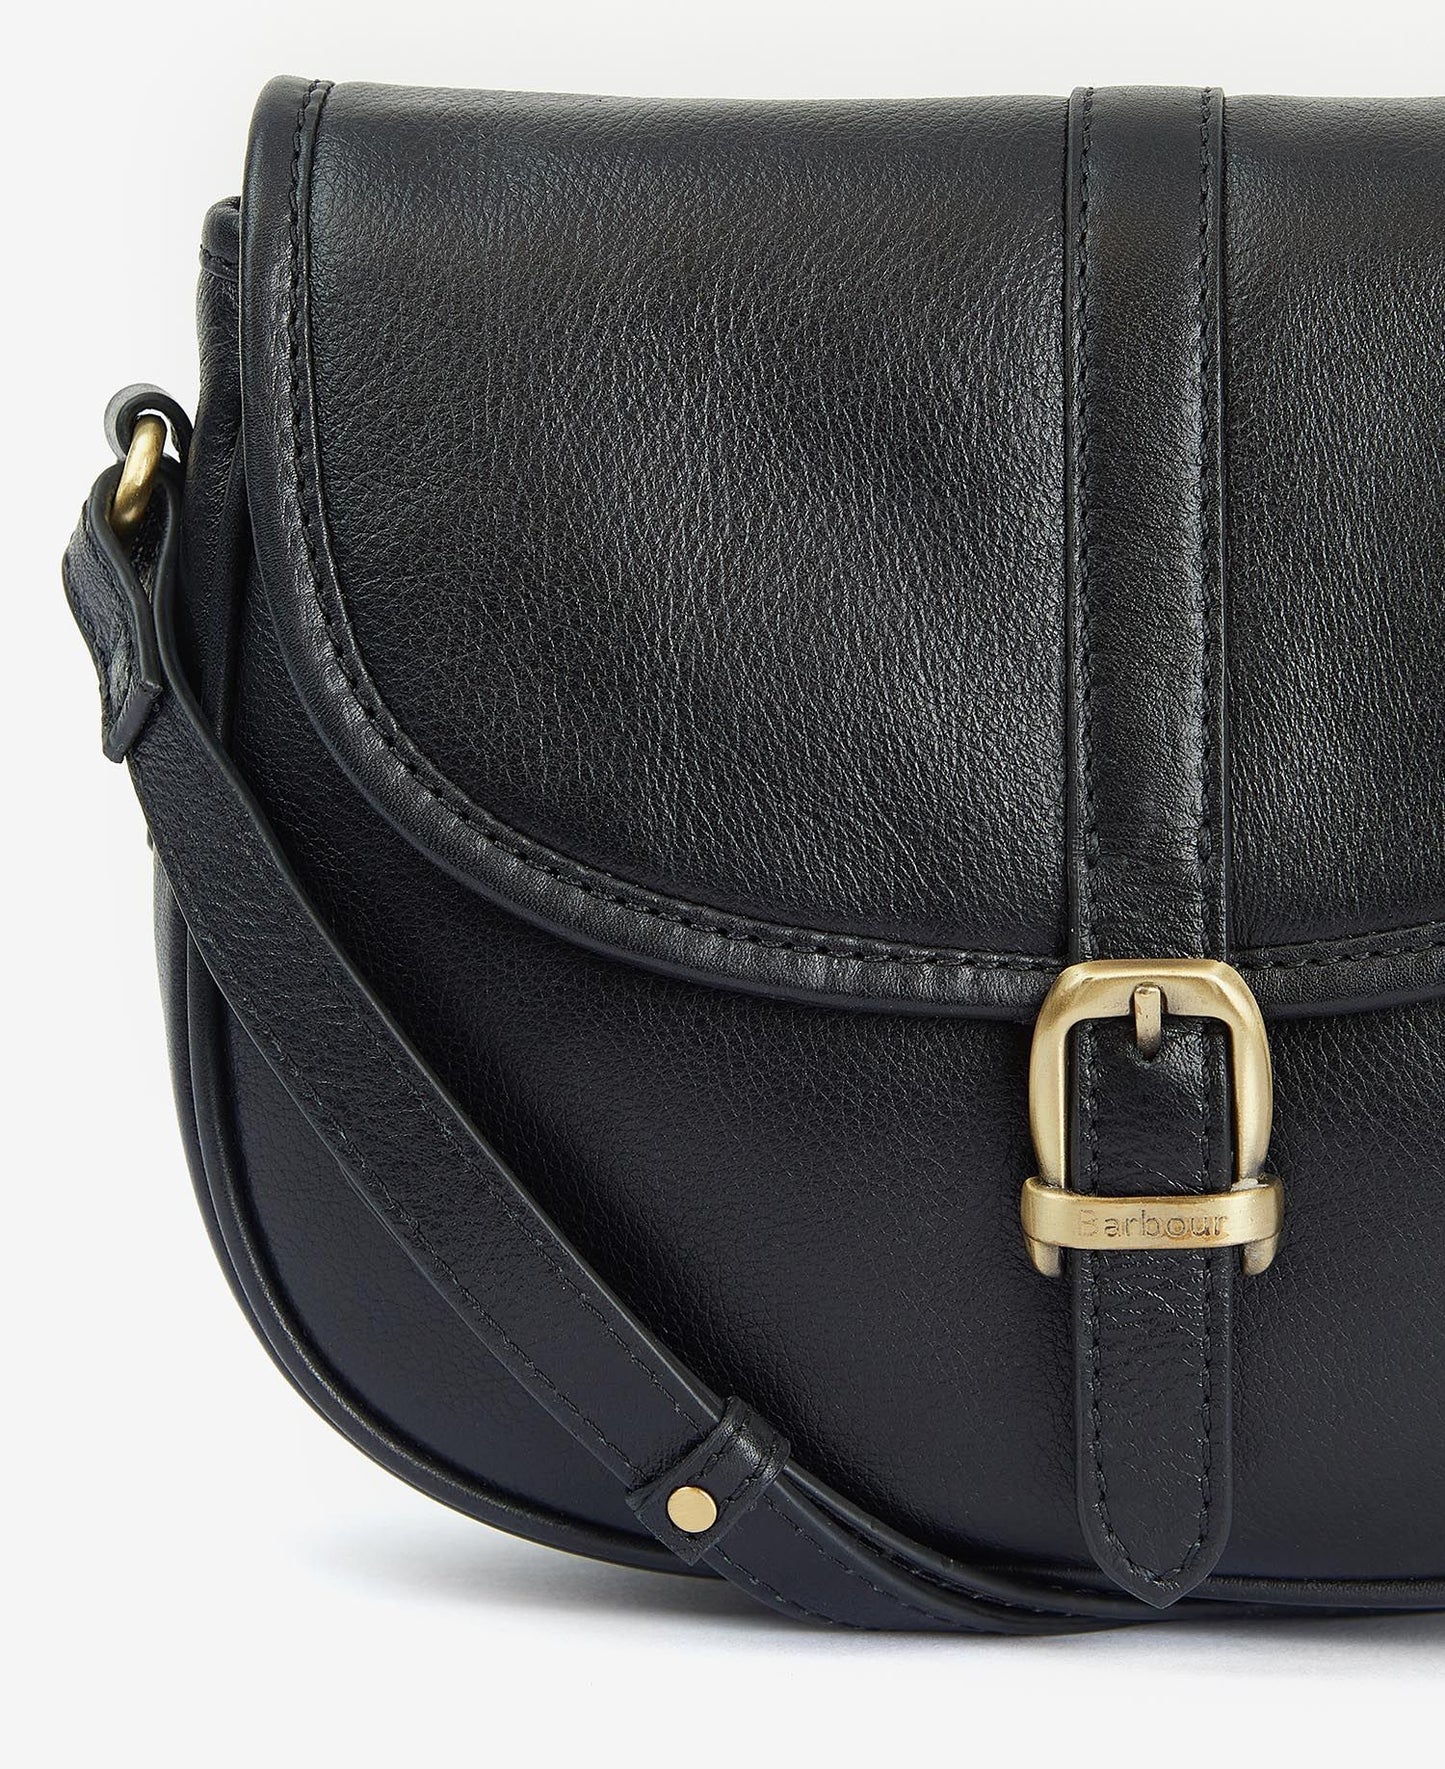 Barbour Bag Woman Medium Leather Saddle Black